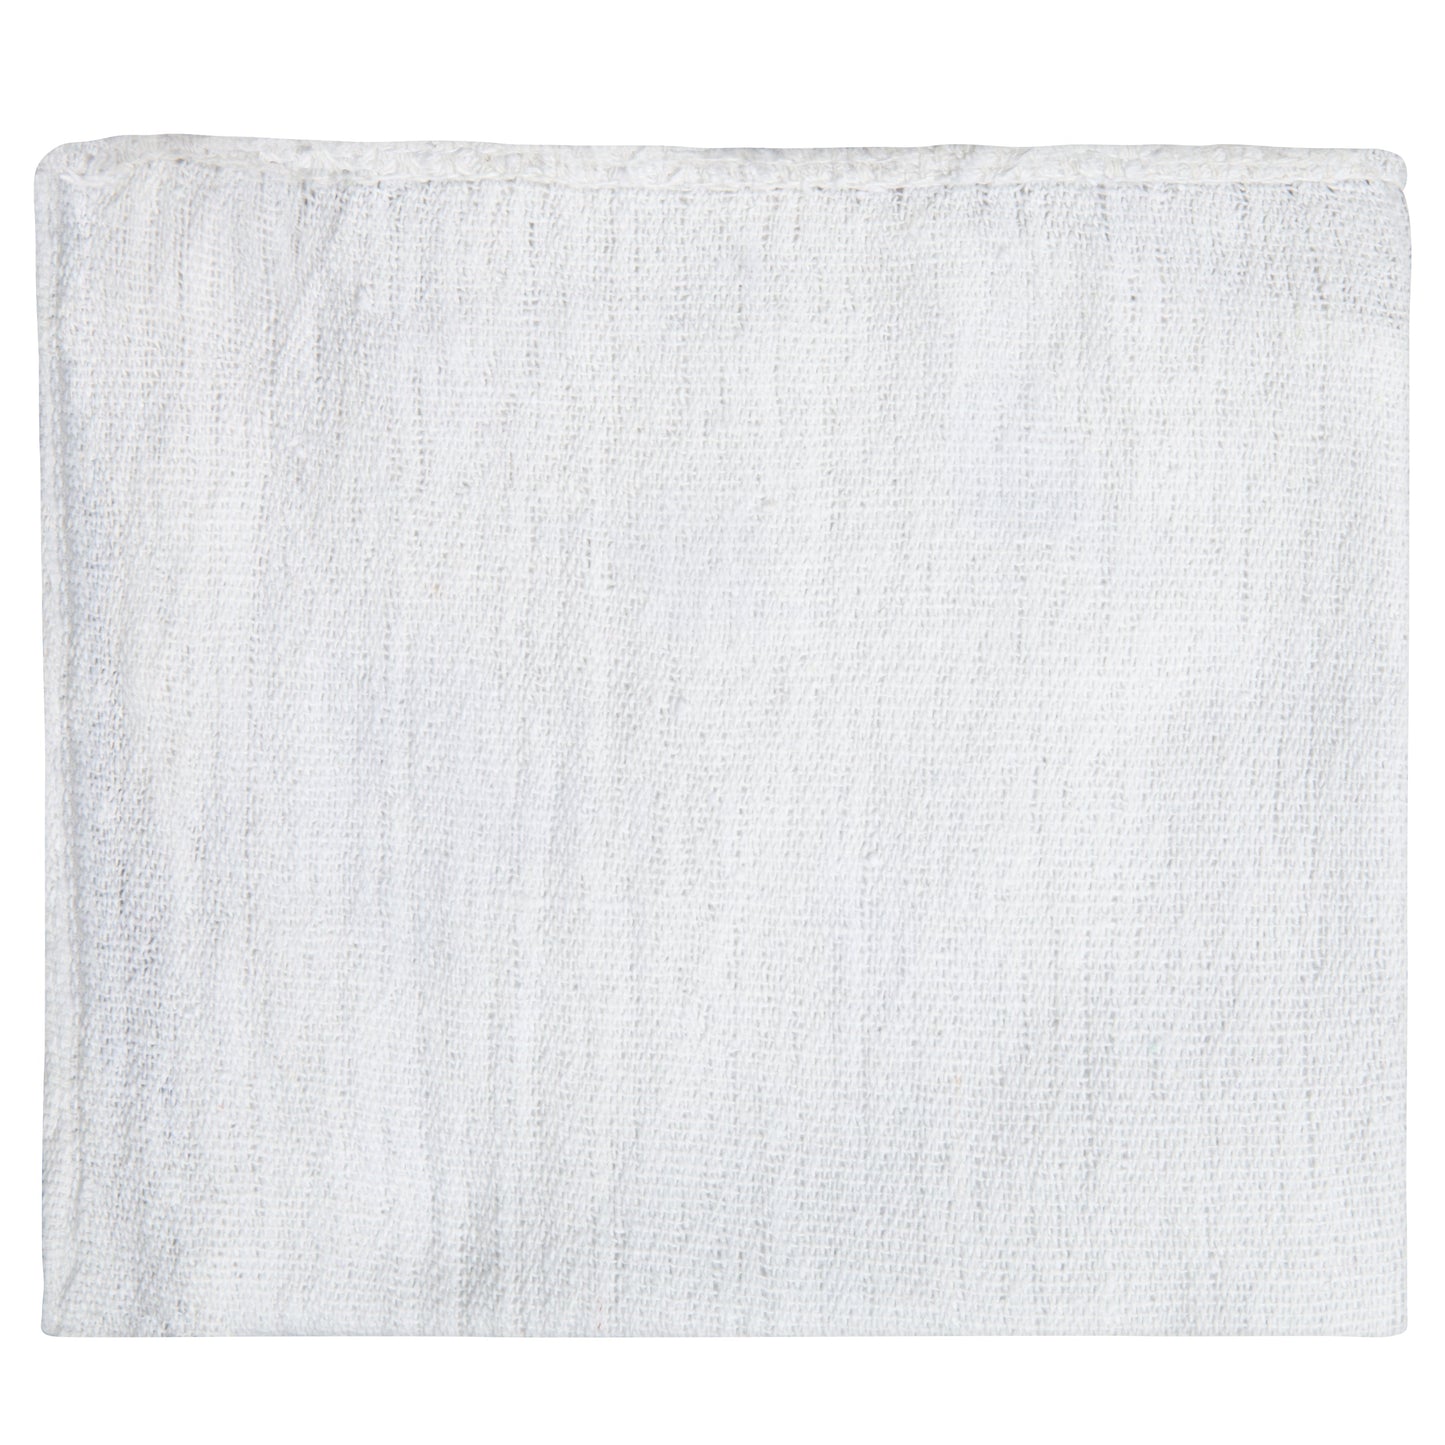 American Dawn | 18X30 Inch Bleached Printer Towel